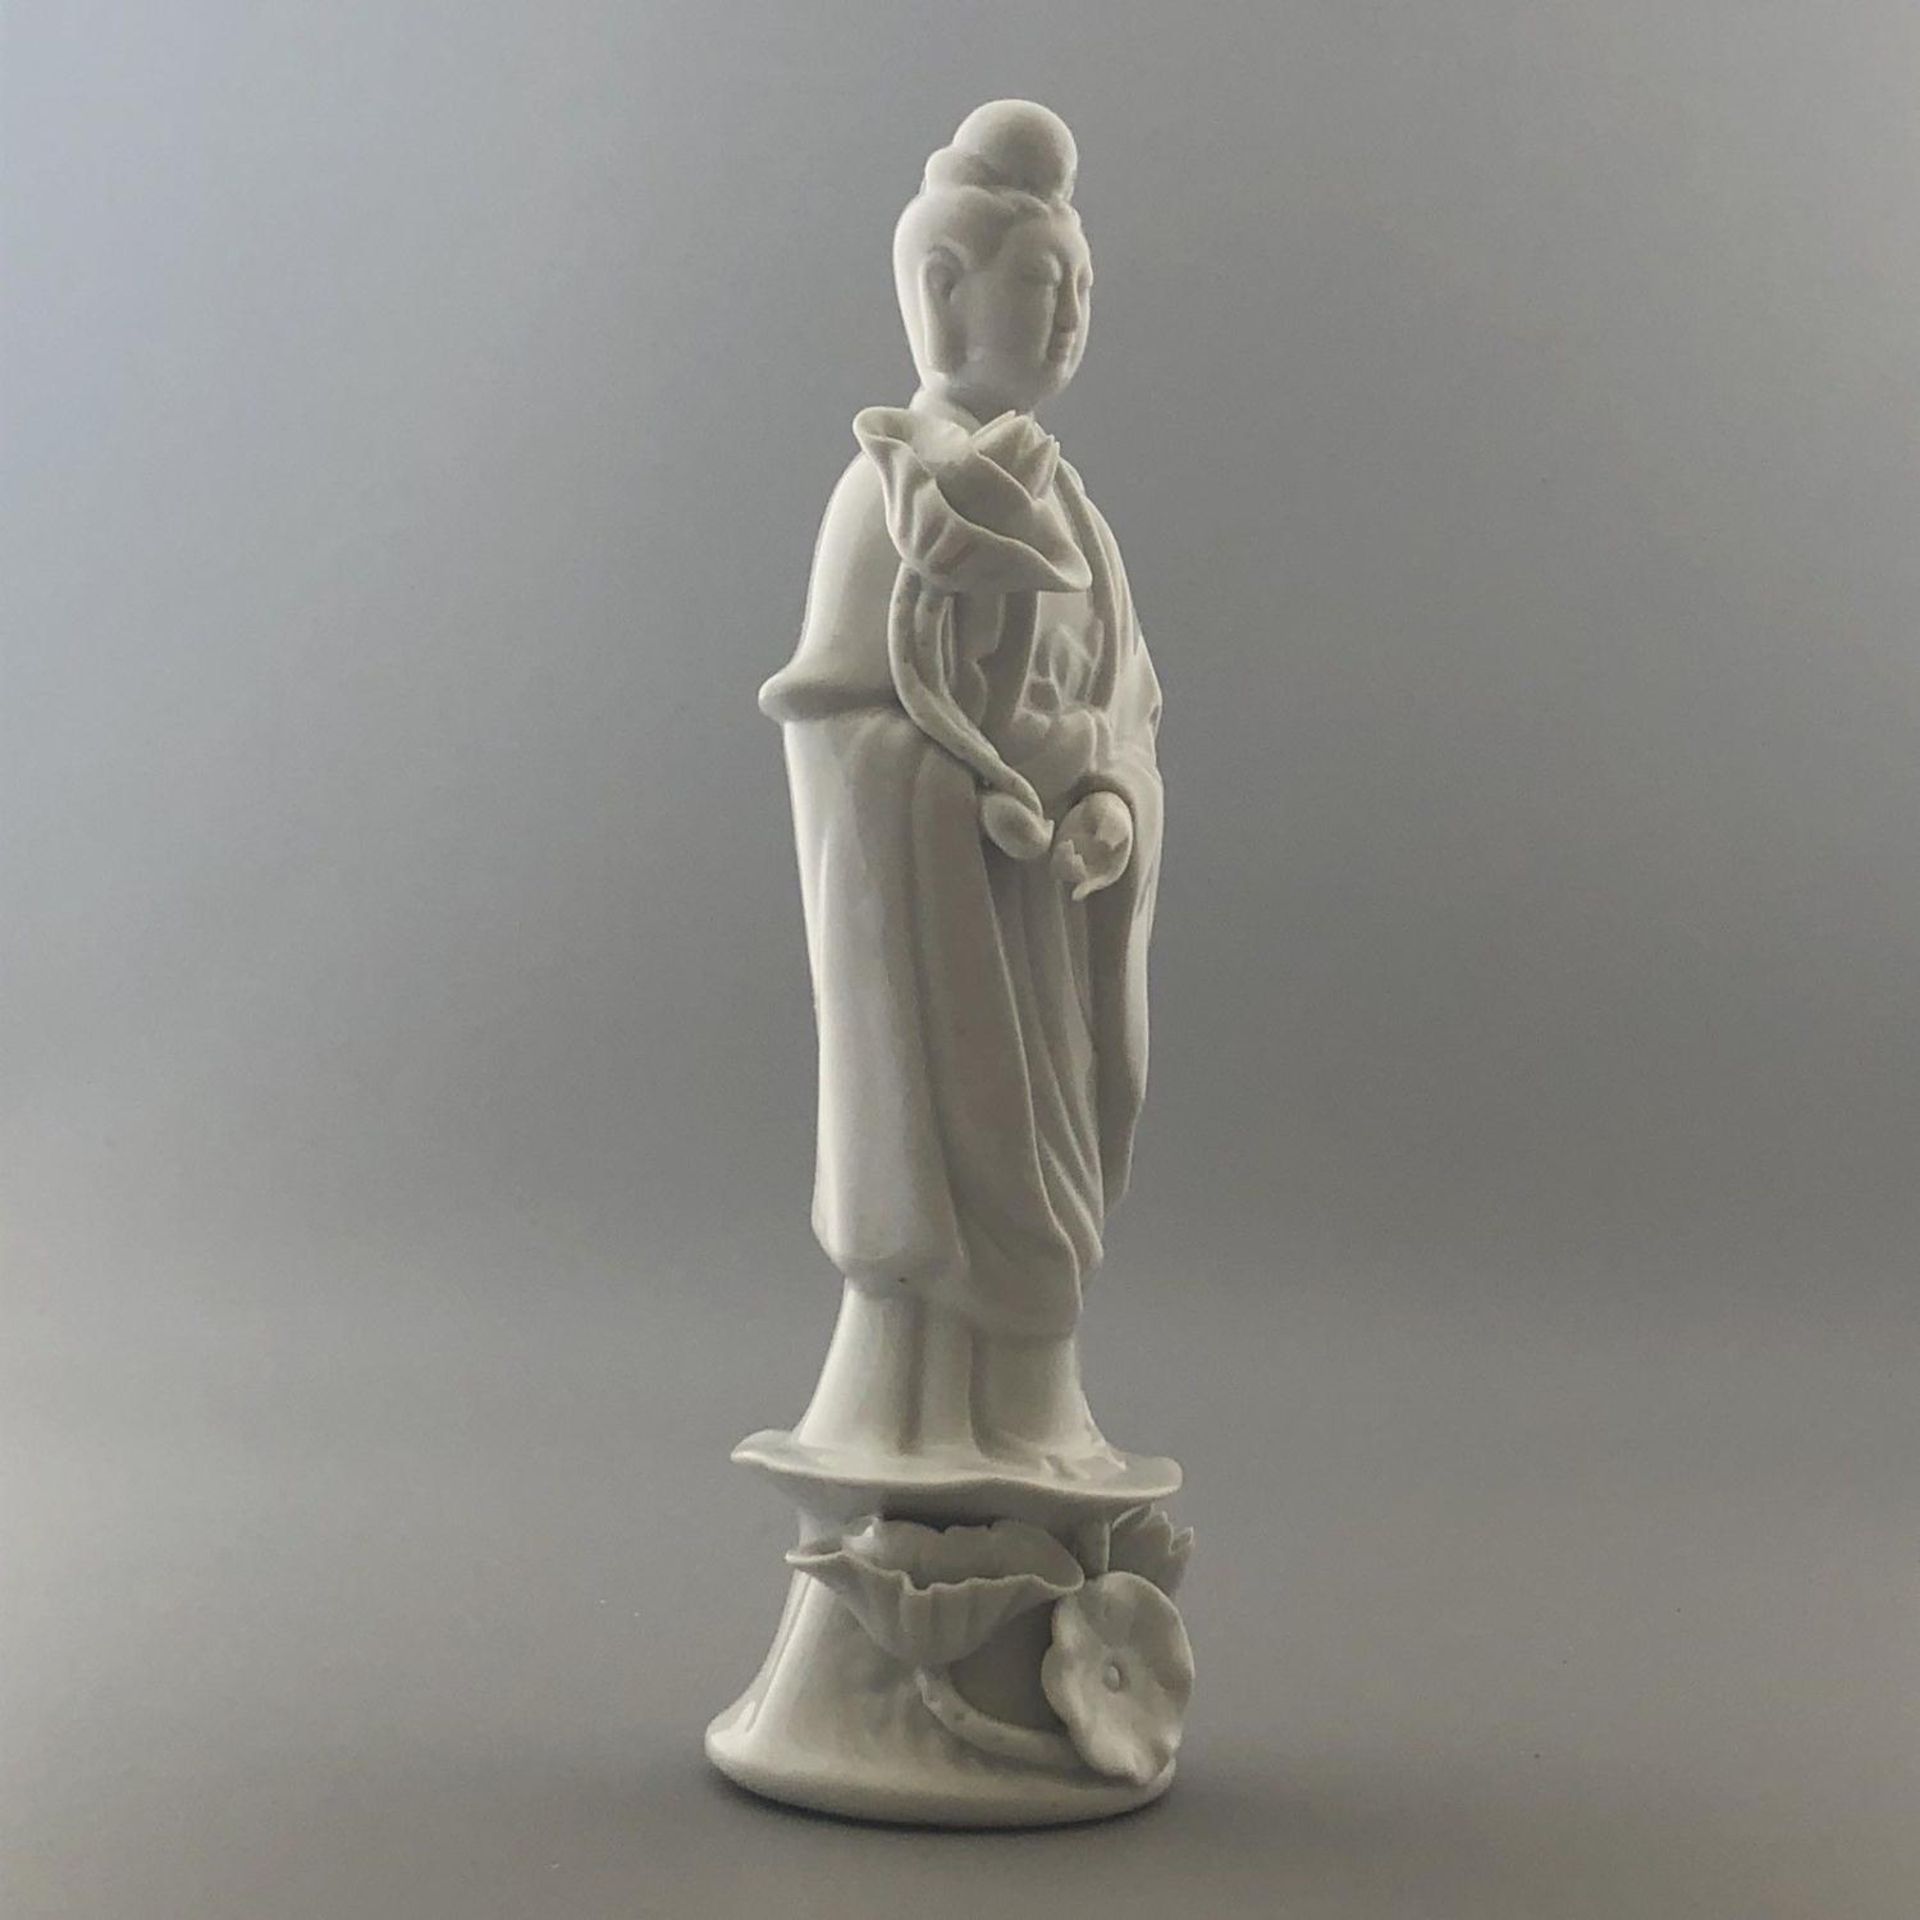 Old Antique Chinese Porcelain Figurine - Blanc de Chine - Guan Yin Lotus Flower - Image 2 of 9